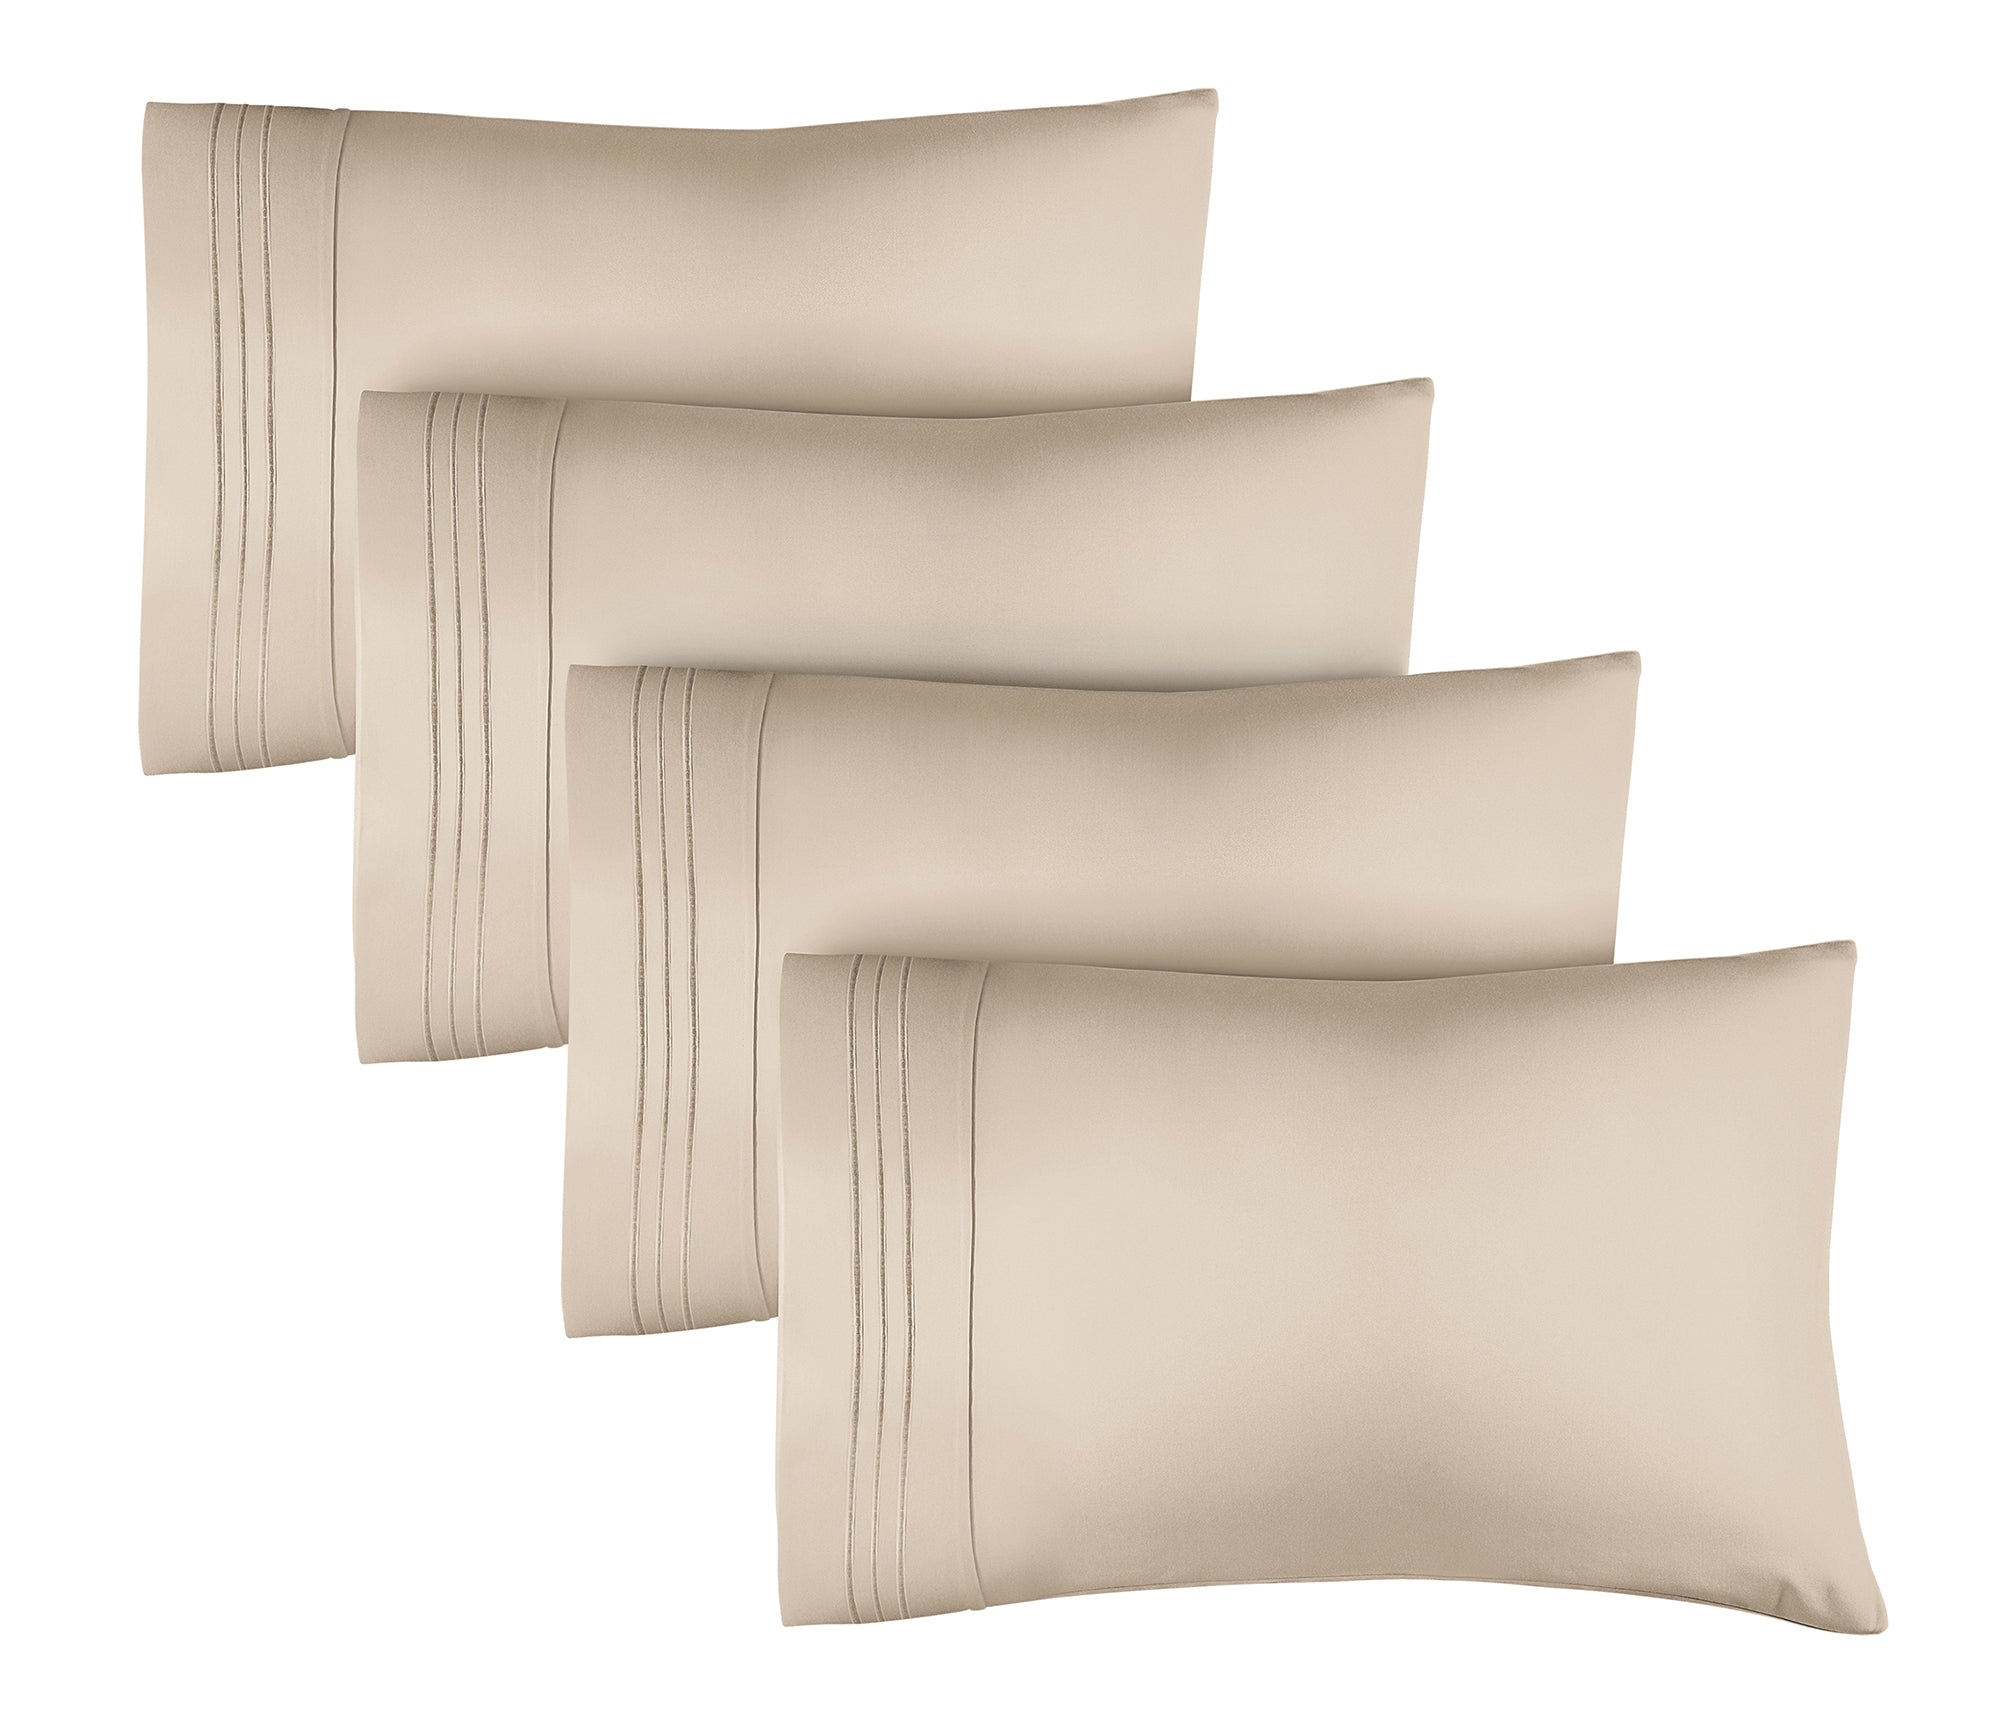 4 Pillowcase Set - Beige